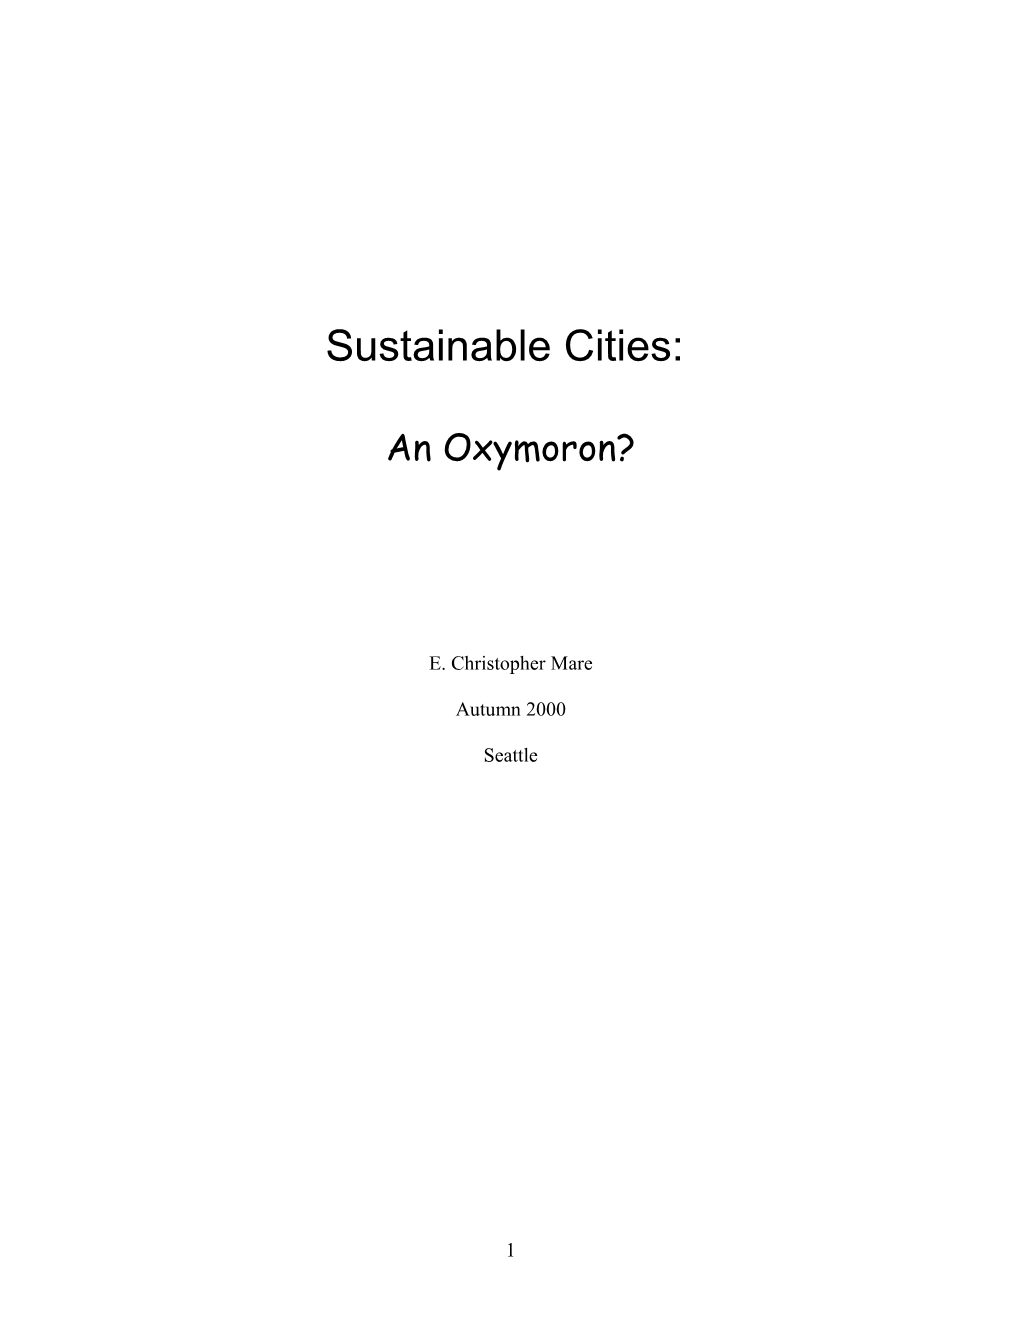 Sustainable Cities: An Oxymoron